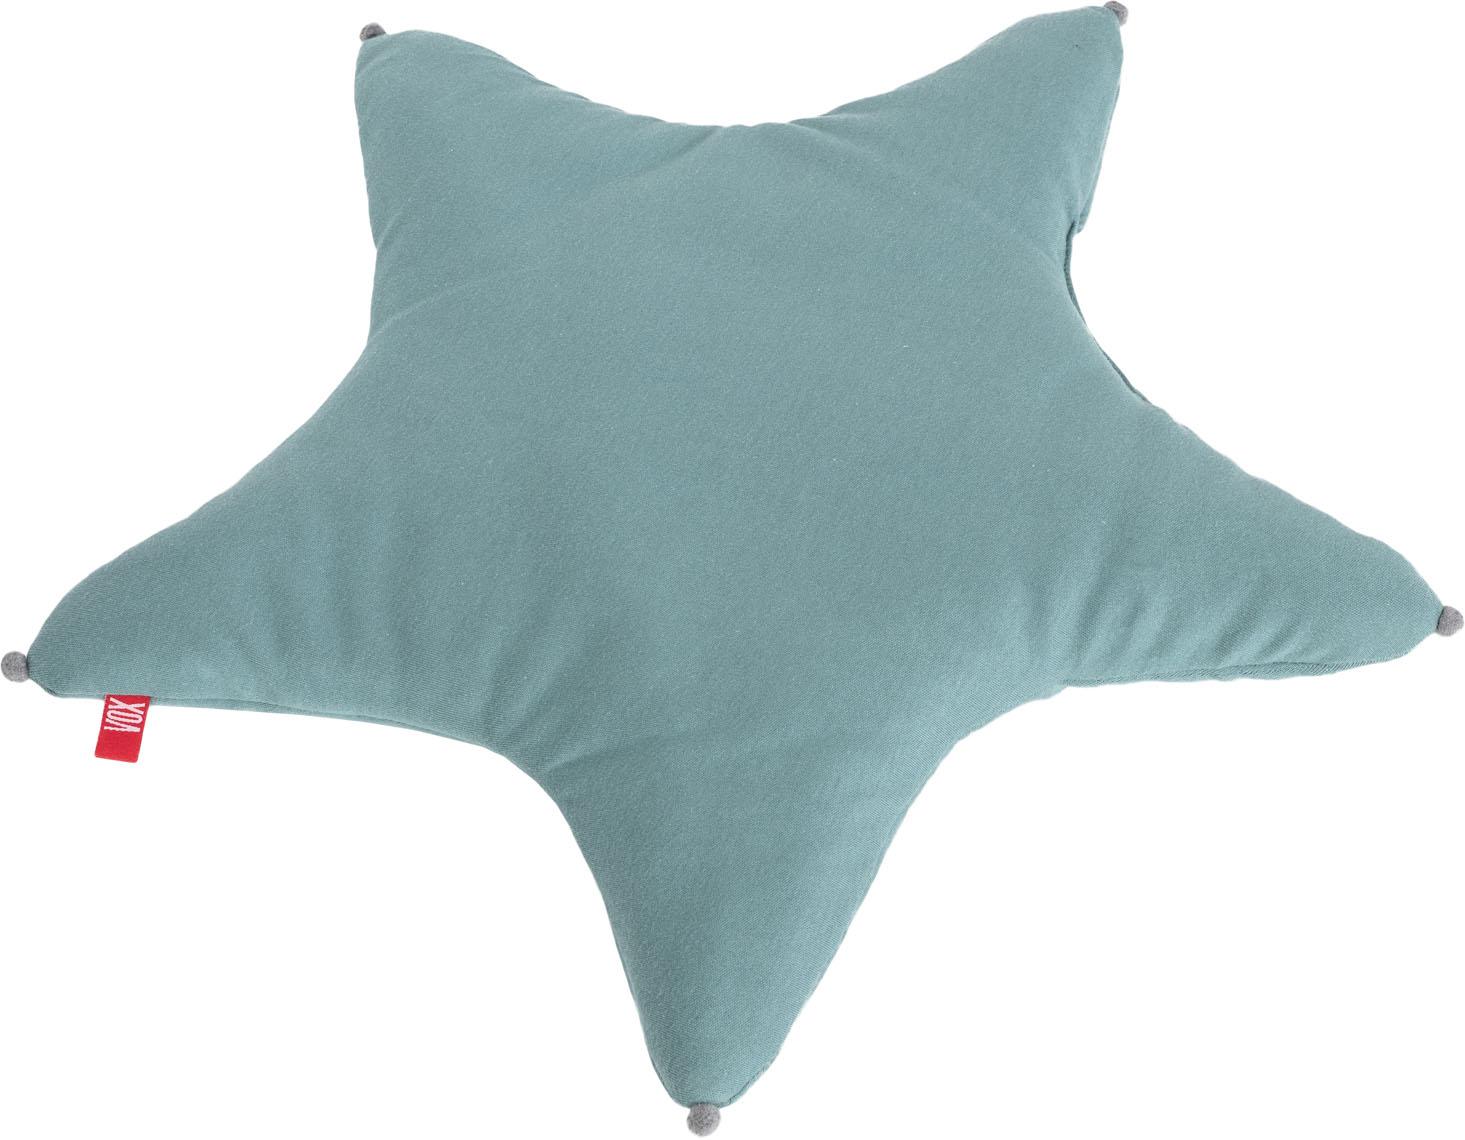 Pillow Star PURE mint